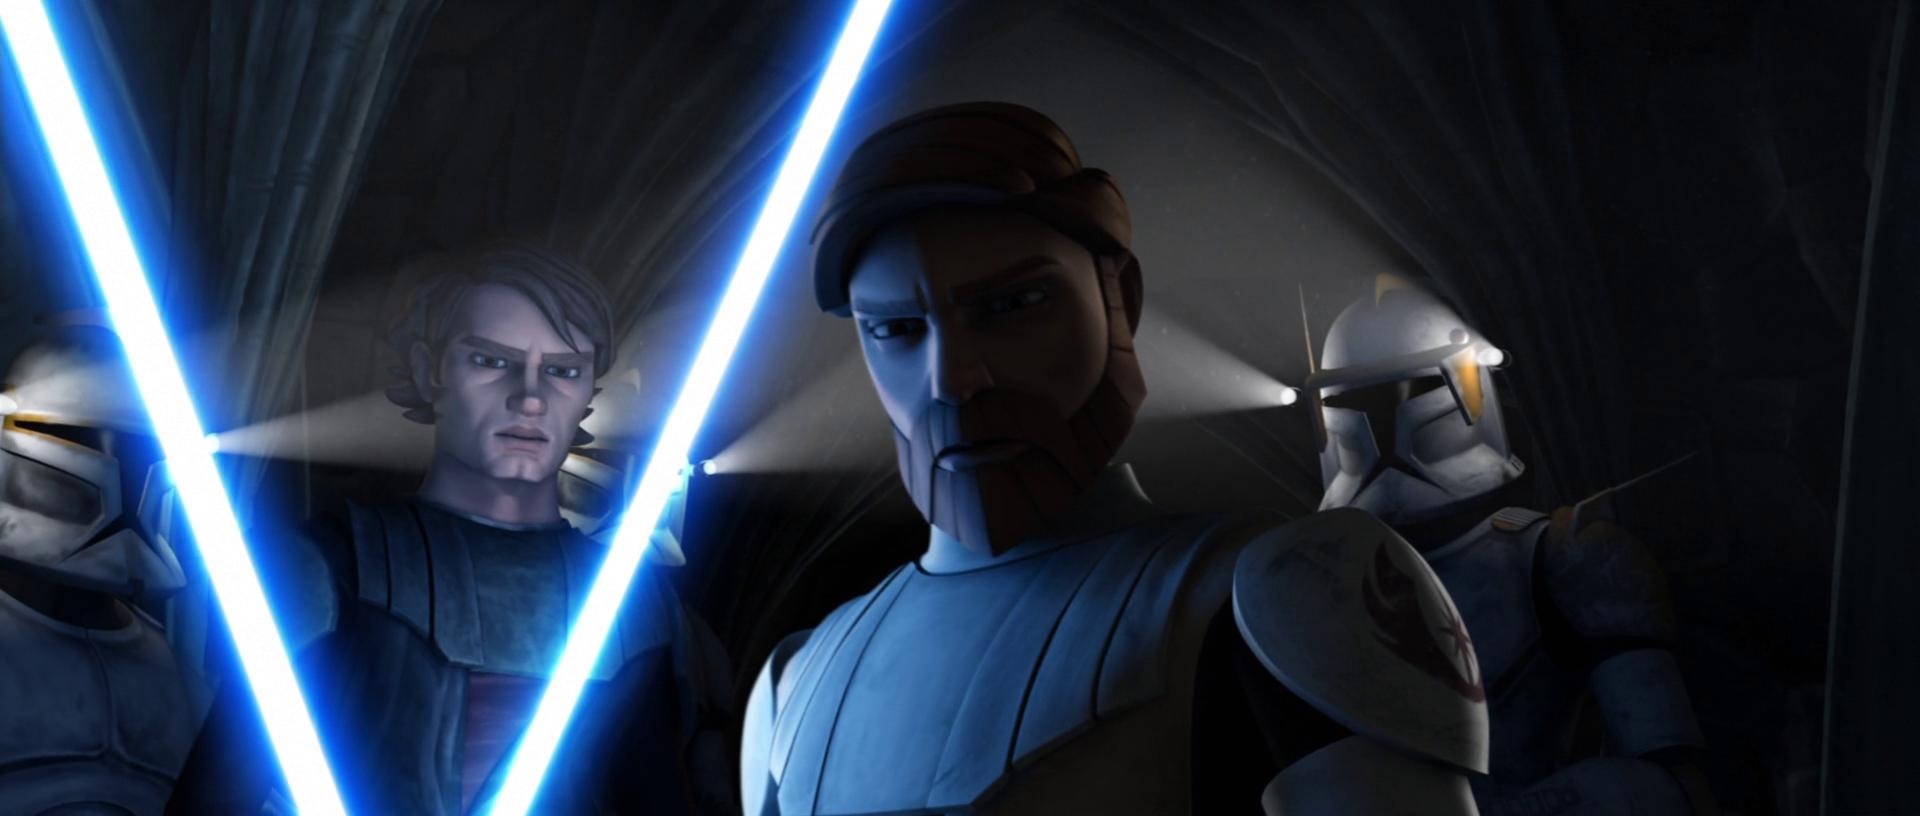 Anakin, Obi-Wan, and Commander Cody prepare for battle.